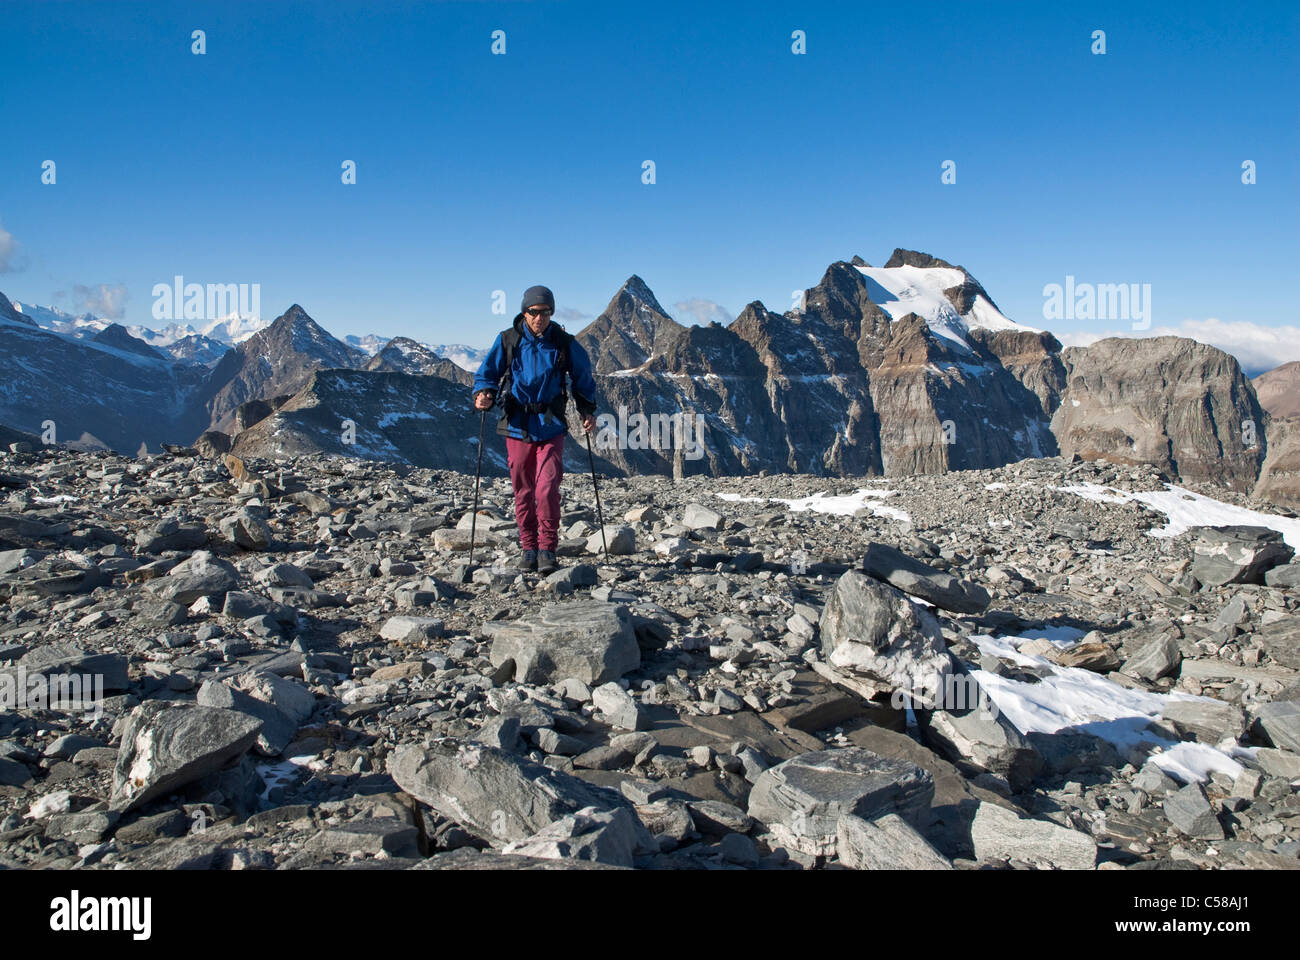 3000, adventures, Alps, Alpinism, alpinist, alpine traveller, alpine walking, alpine wandering, mountains, mountaineering, mount Stock Photo